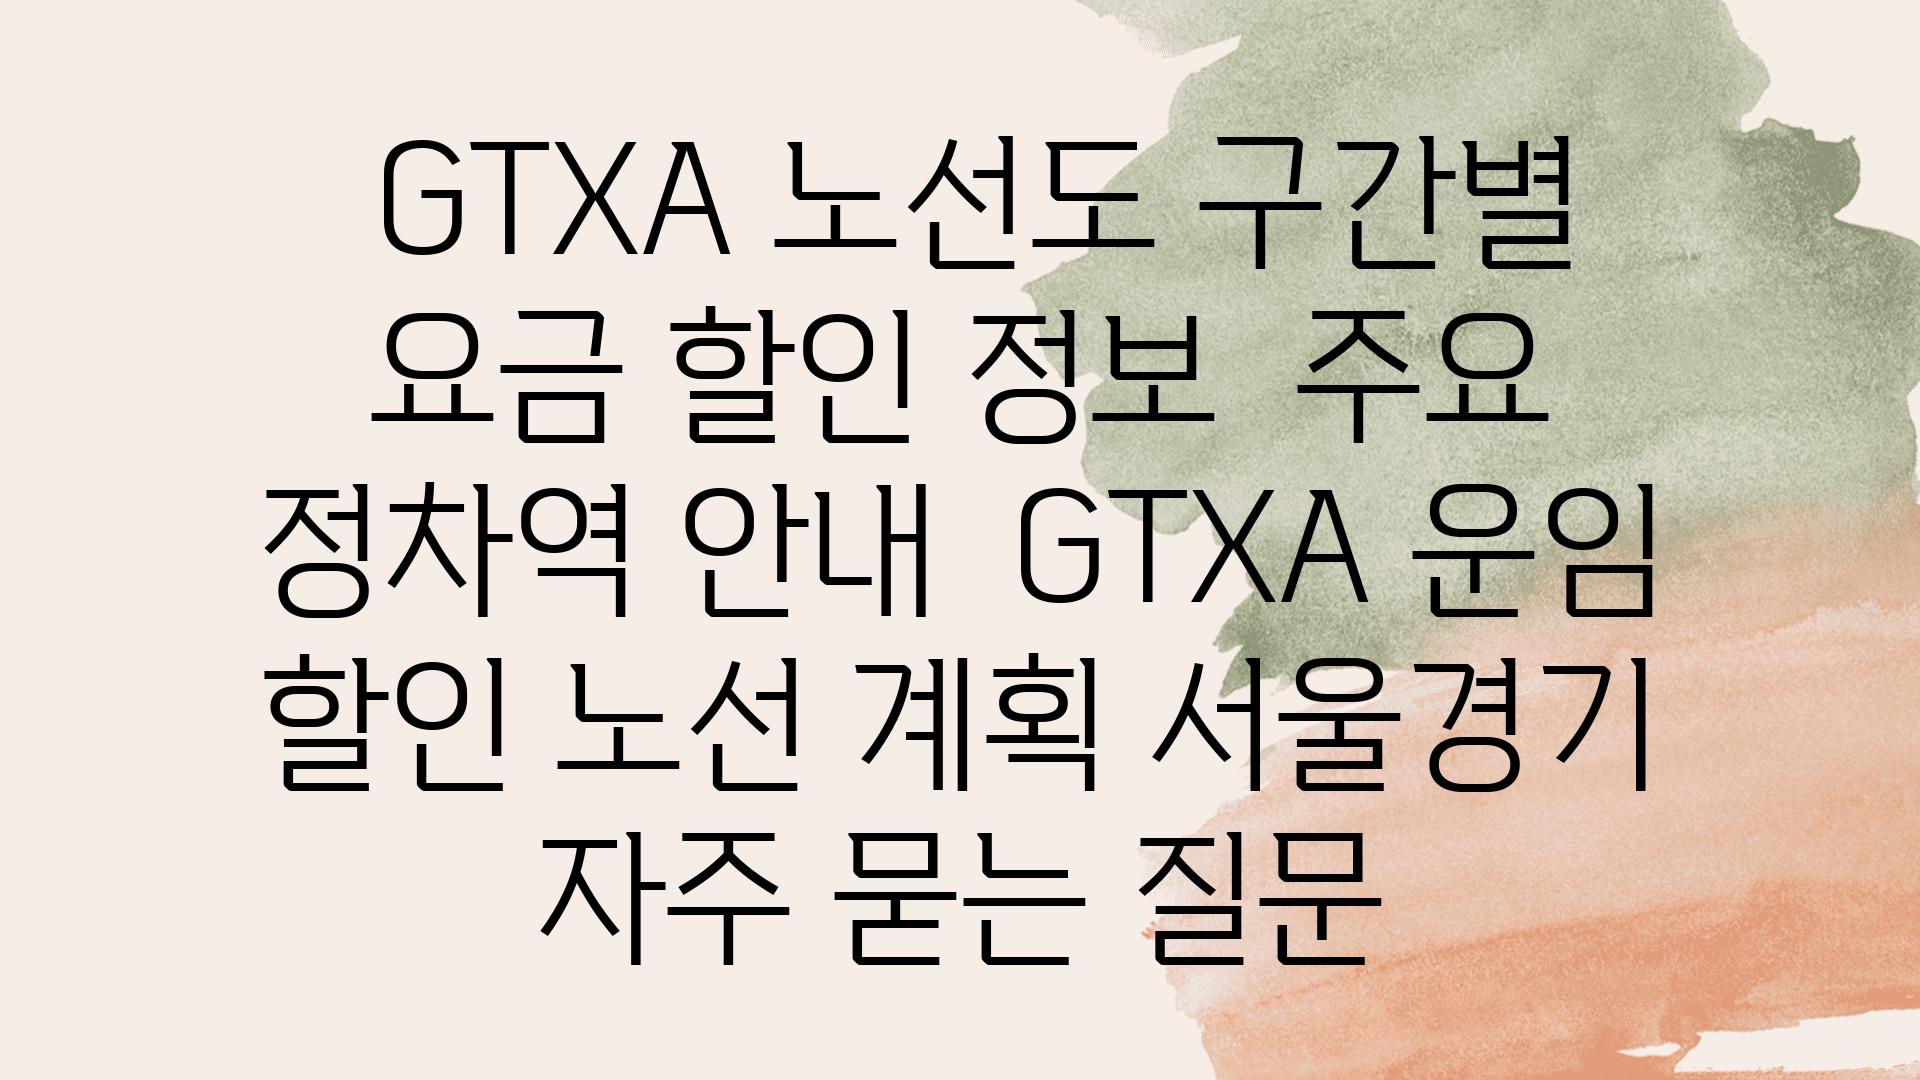  GTXA 노선도 구간별 요금 할인 정보  주요 정차역 공지  GTXA 운임 할인 노선 계획 서울경기 자주 묻는 질문